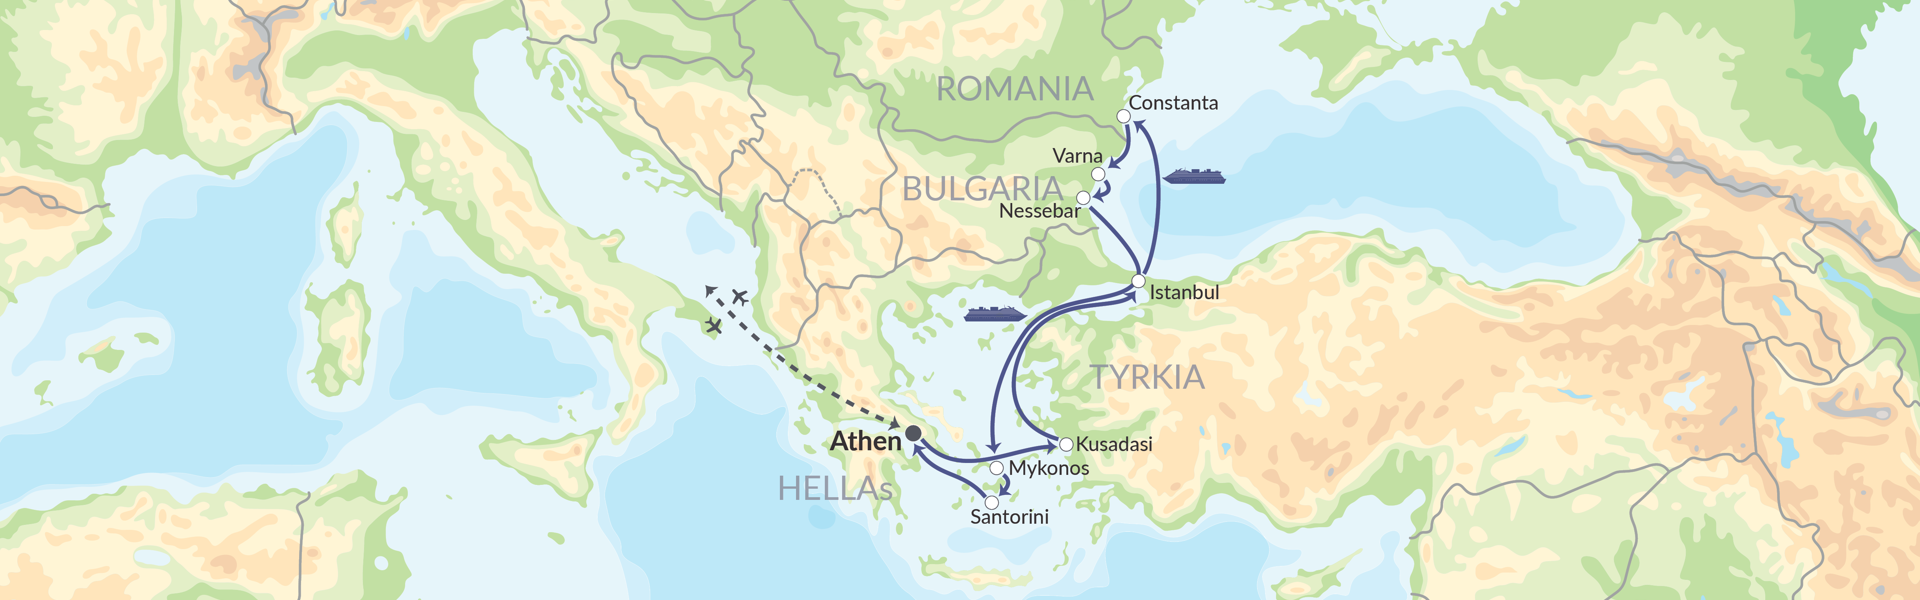 100159 Grækenland, Tyrkiet, Rumænien Og Bulgarien